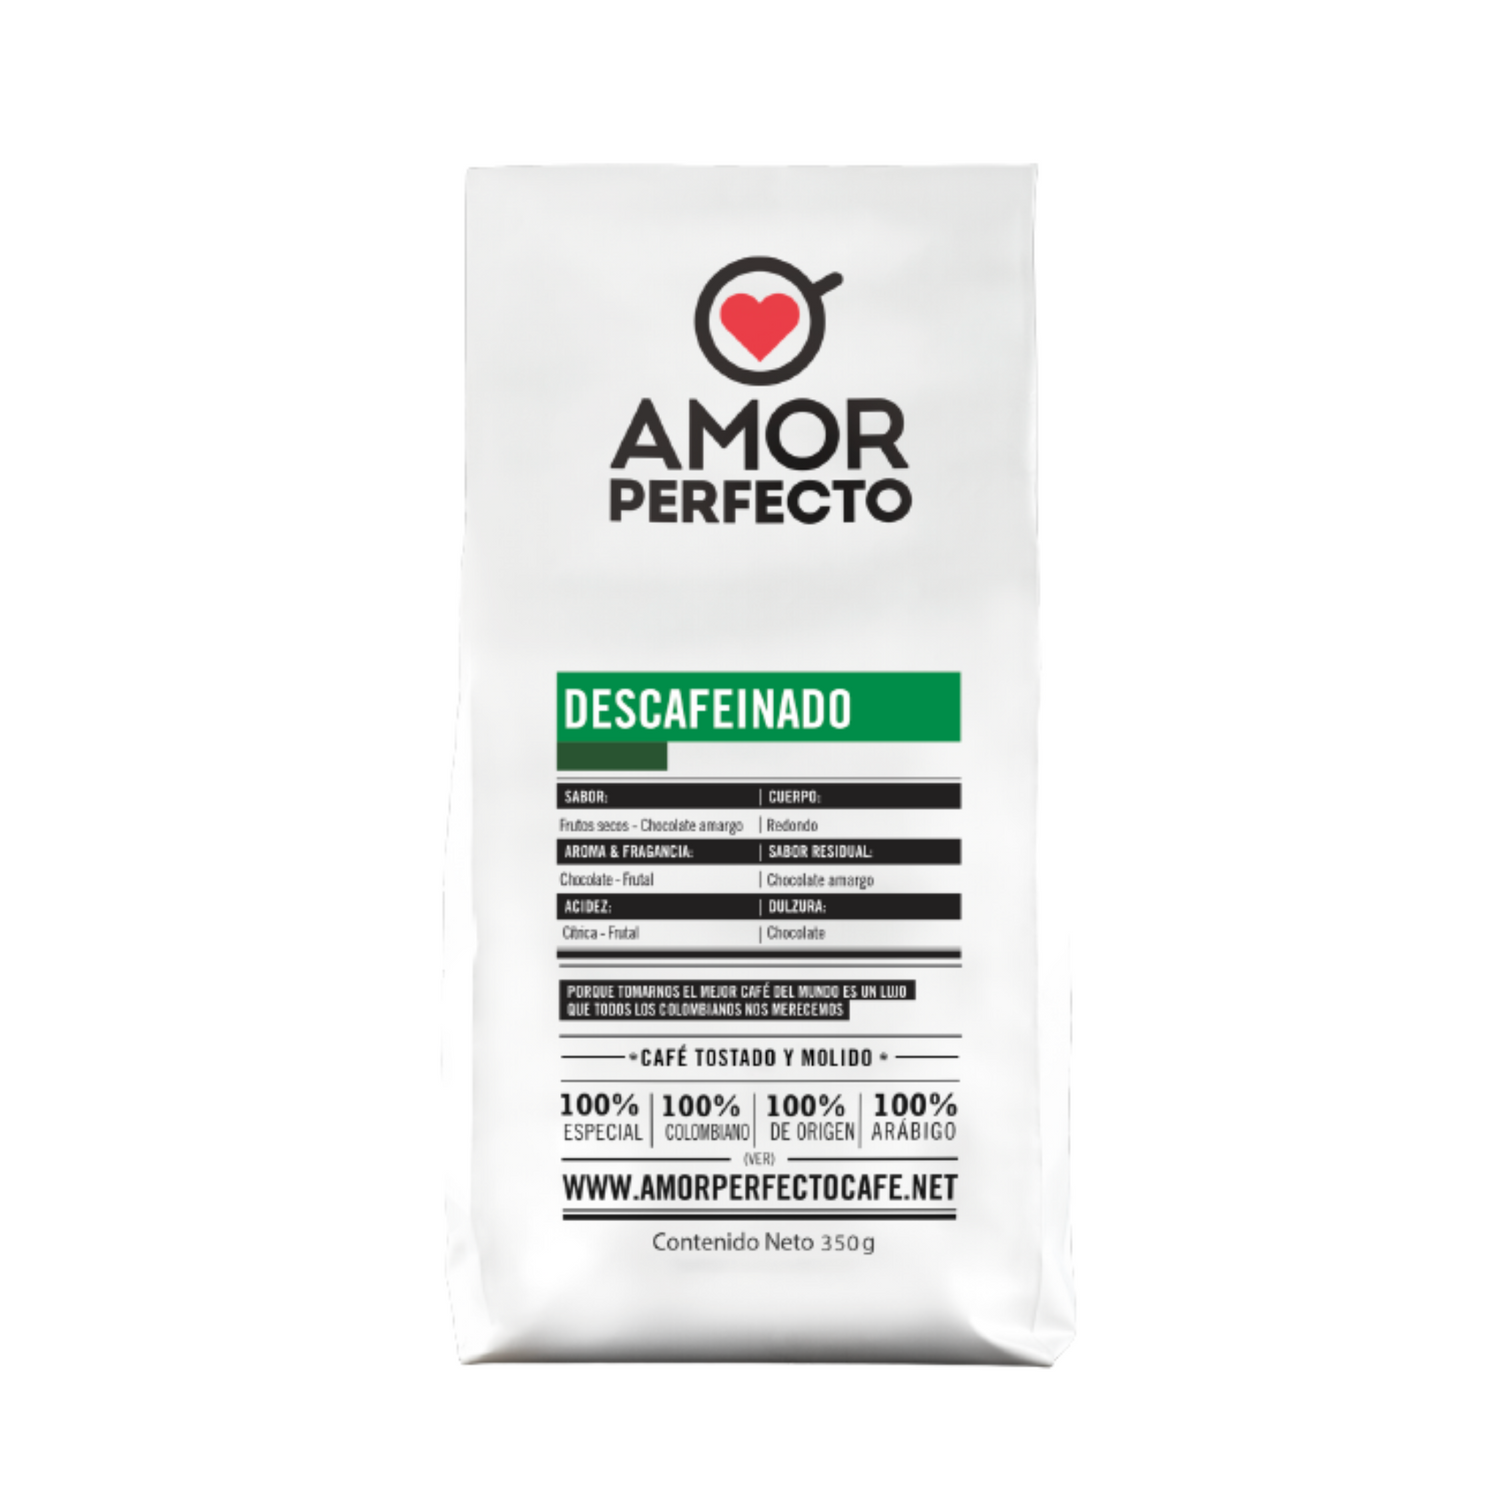 Amor Perfecto Decaffeinated single origin - low acid coffee